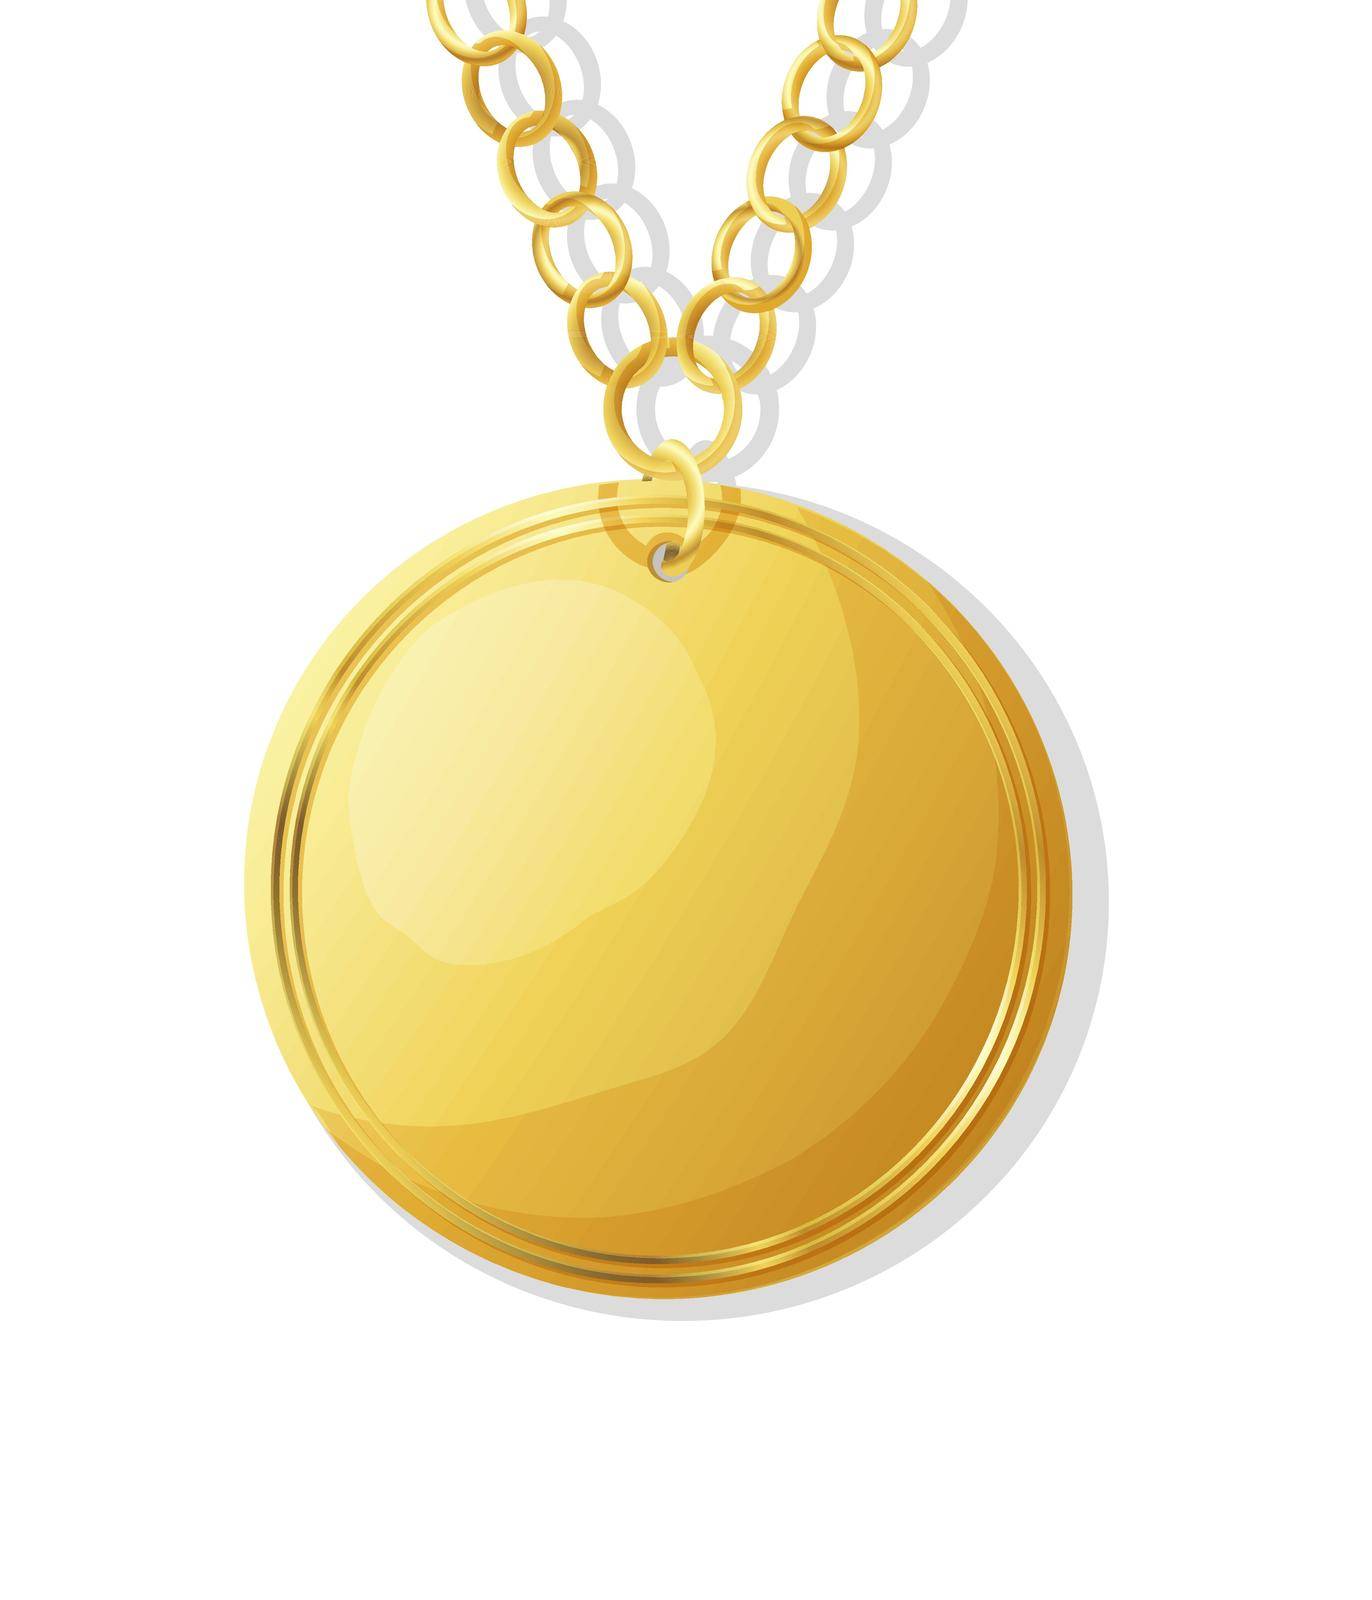 Golden medal by Lirch